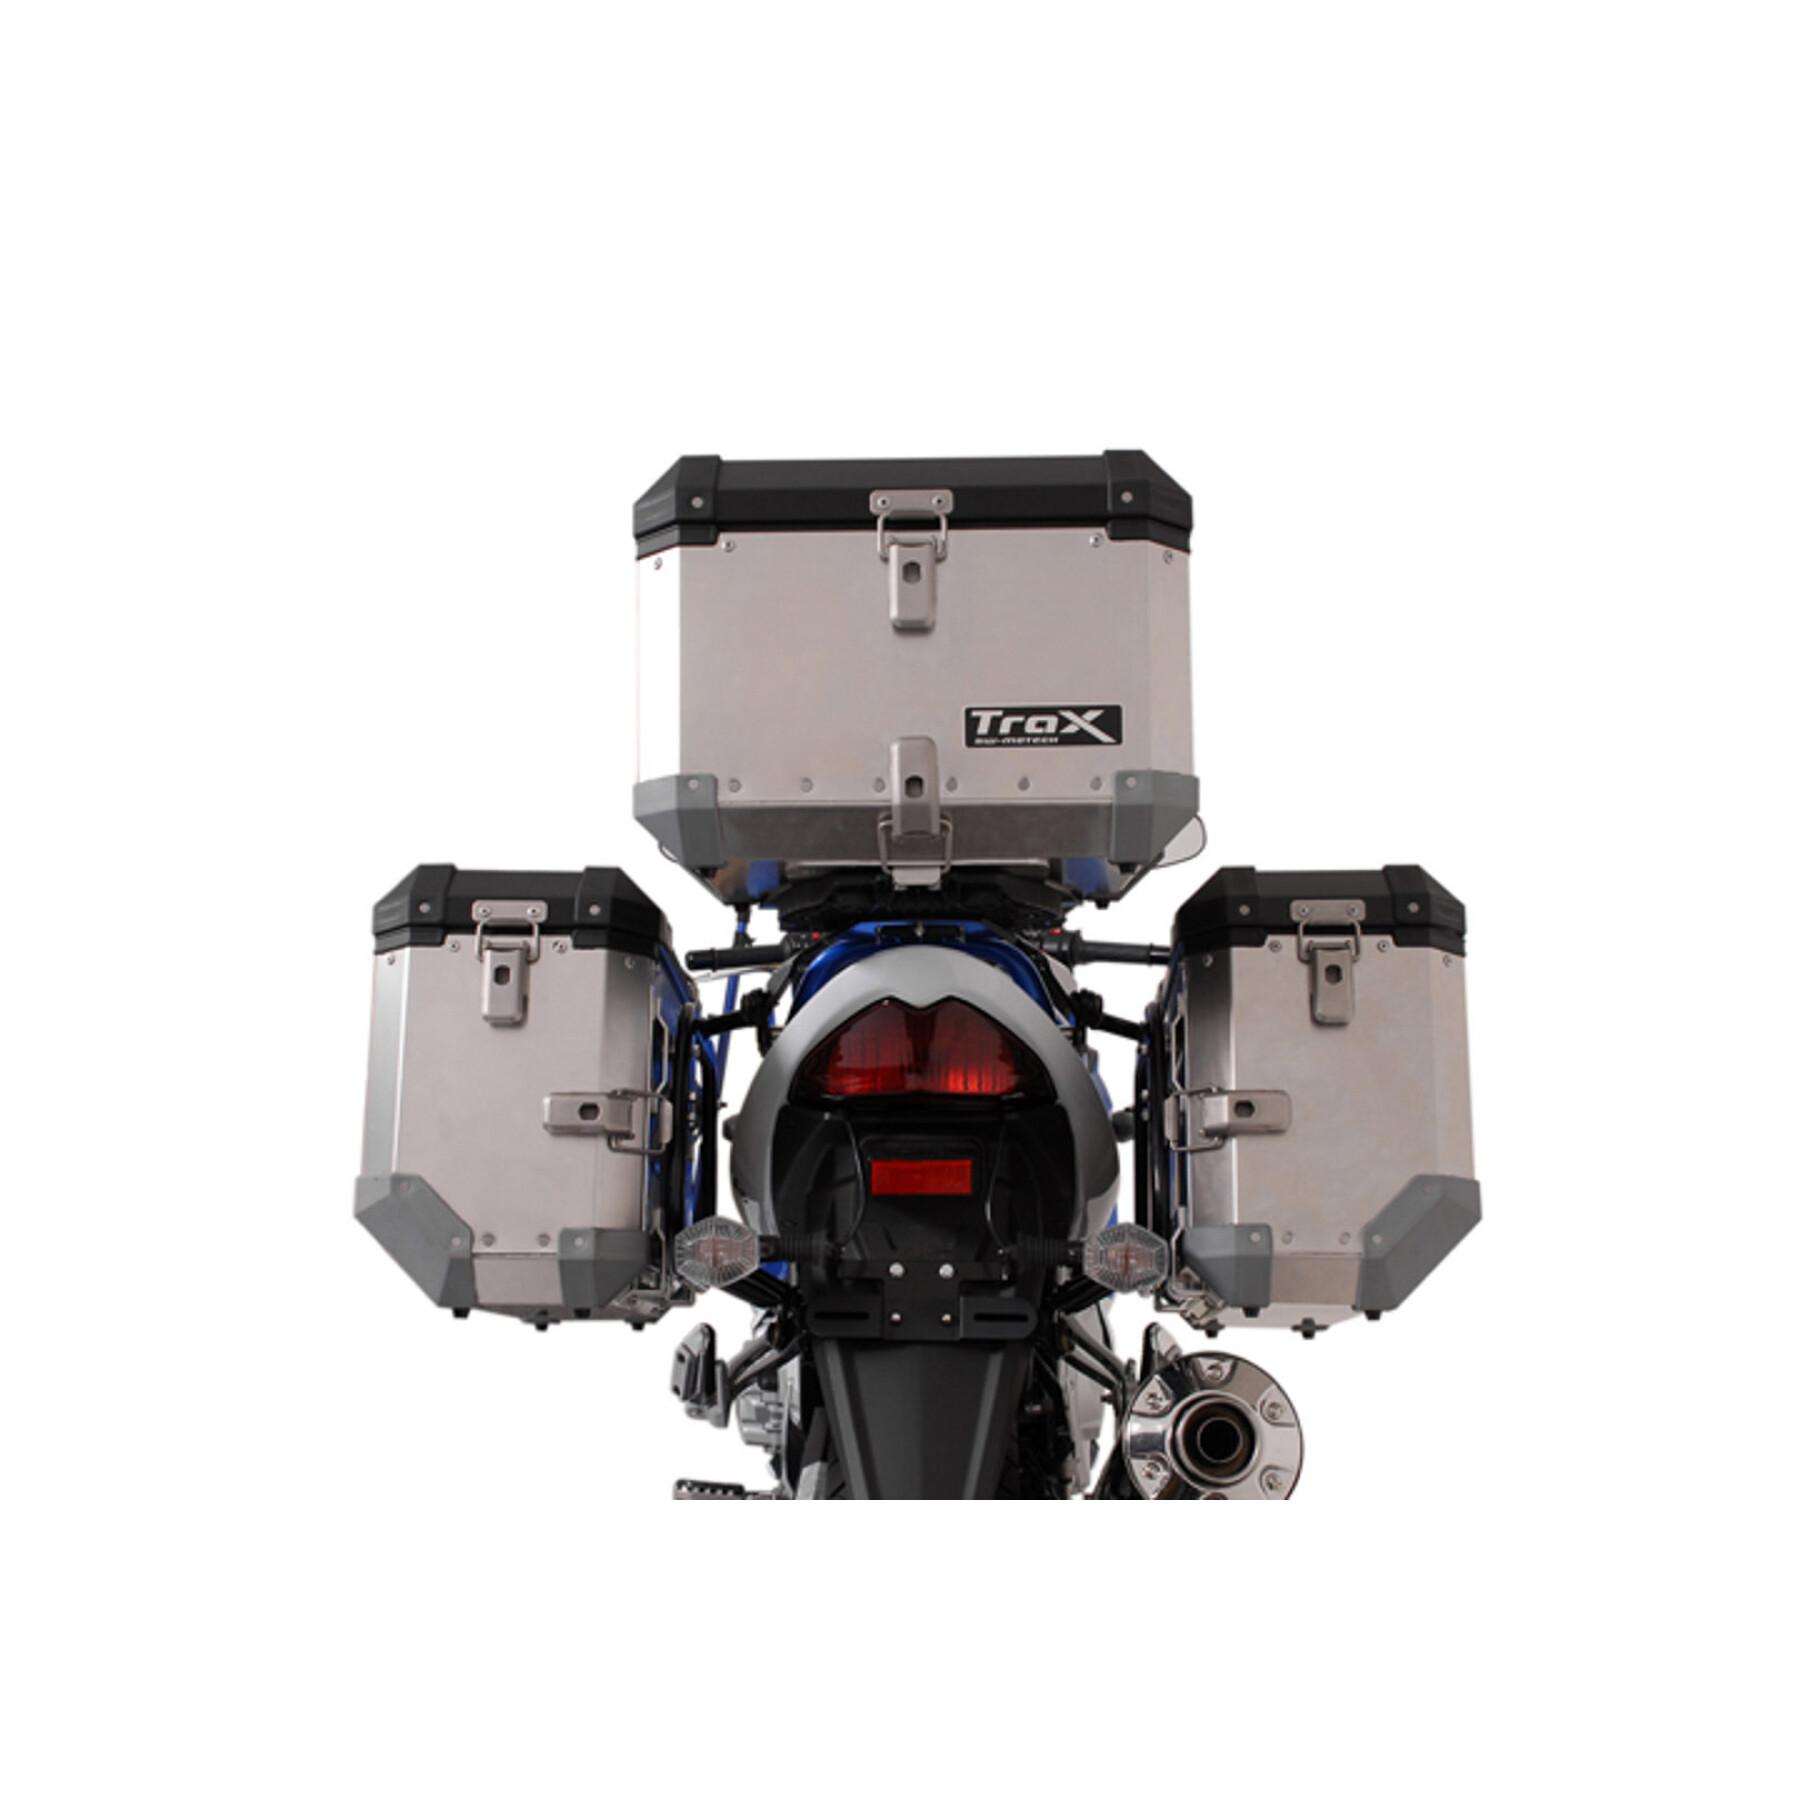 Support valises latérales moto Sw-Motech Evo. Suzuki Gsf650/650S/1200/1250,Gsx650/1250F